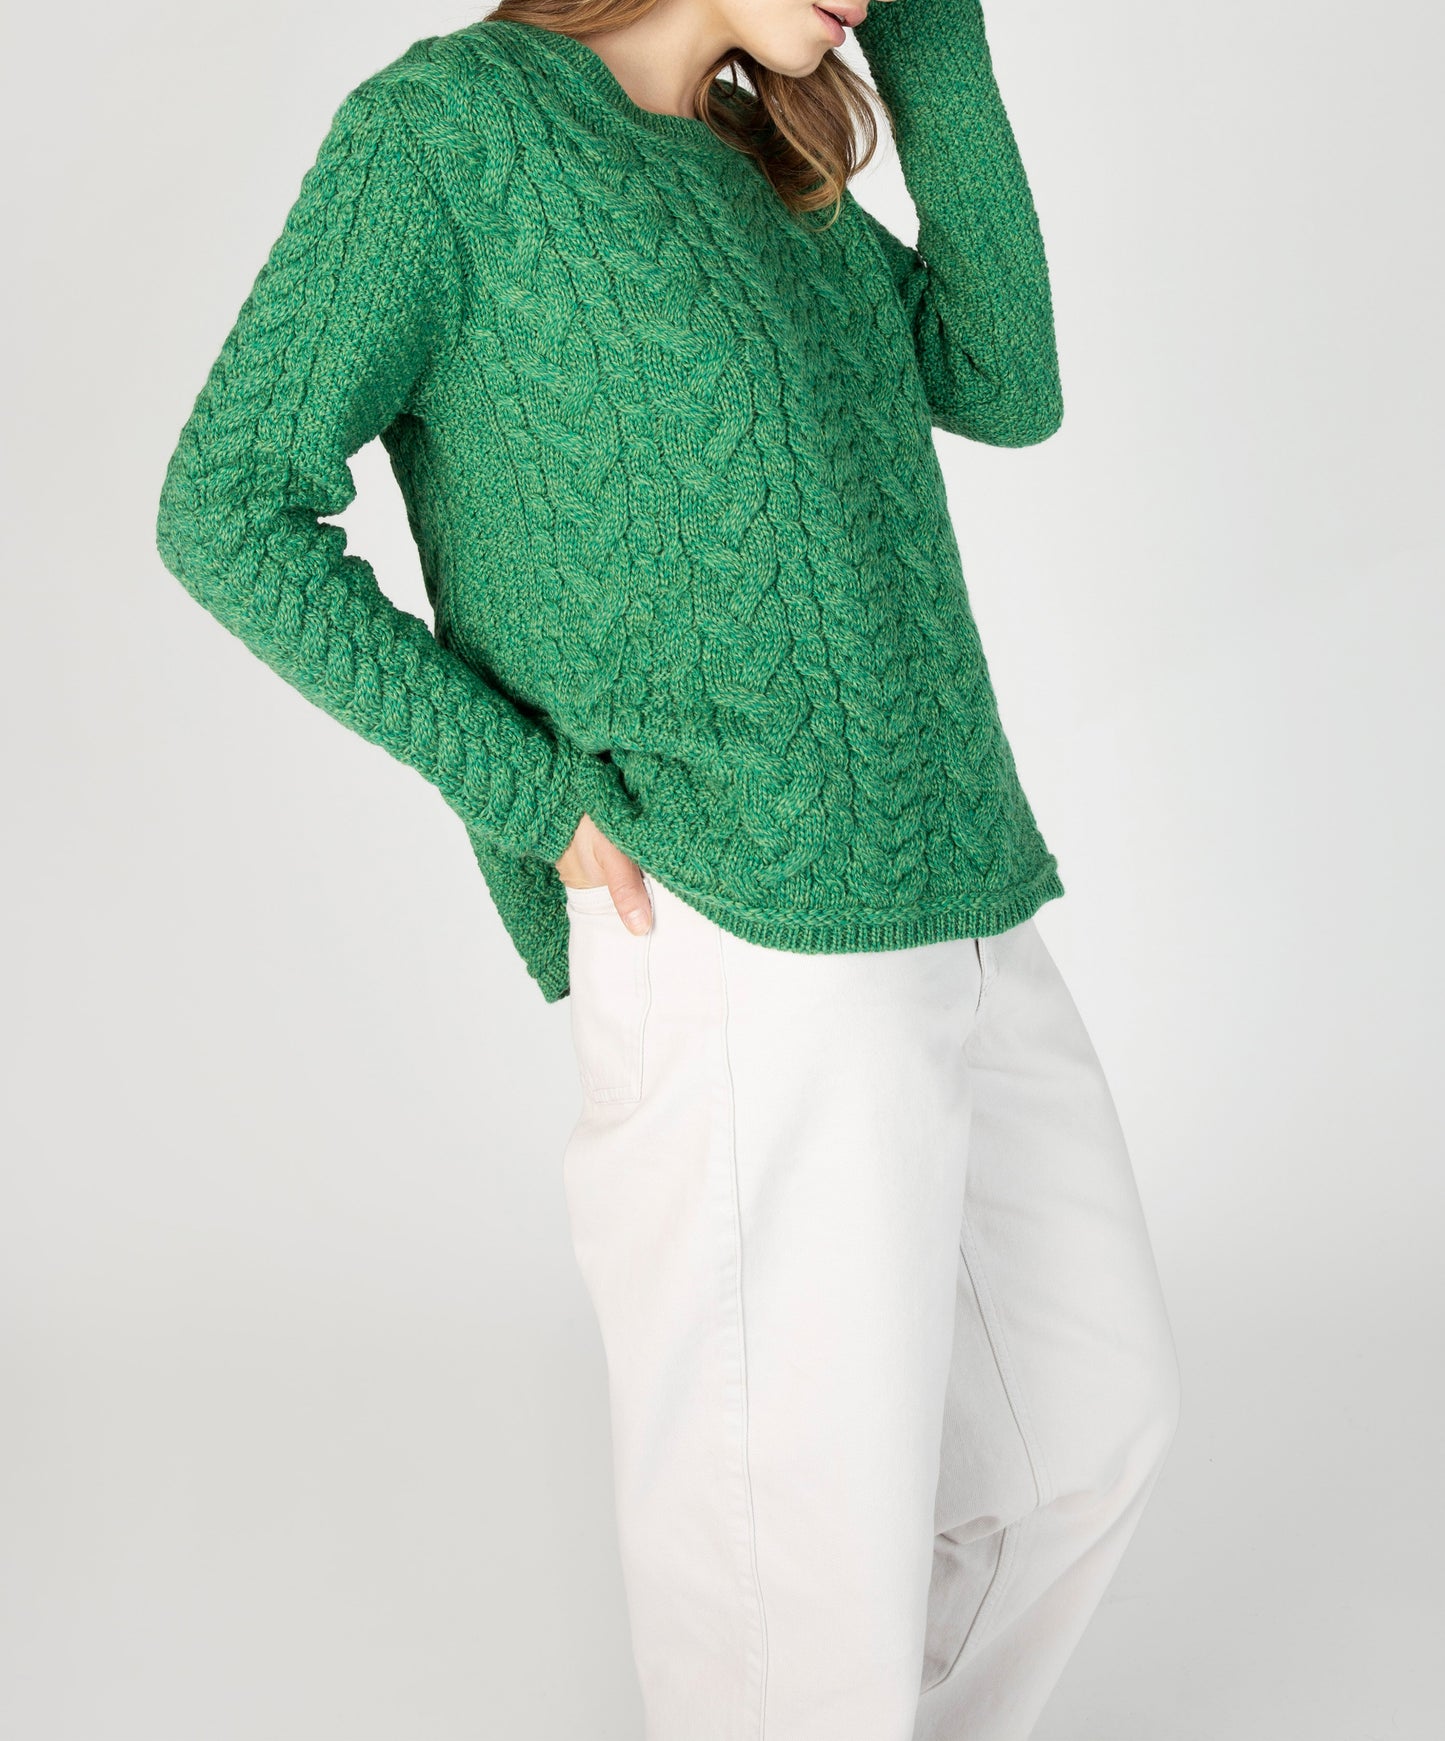 IrelandsEye Knitwear Primrose A-Line Cable Round Neck Sweater Green Marl